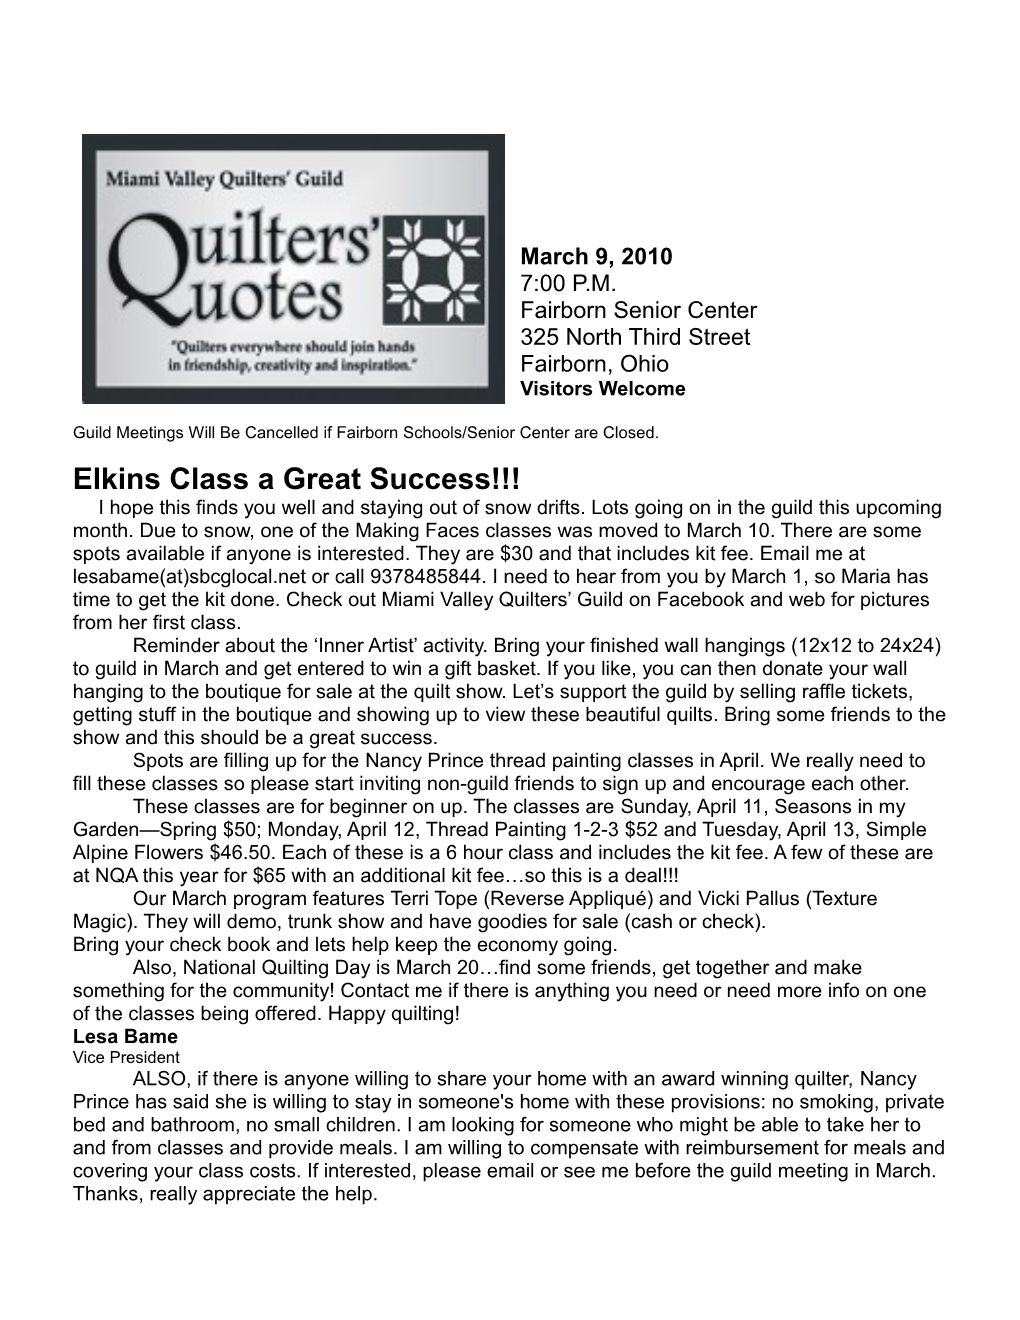 Elkins Class a Great Success